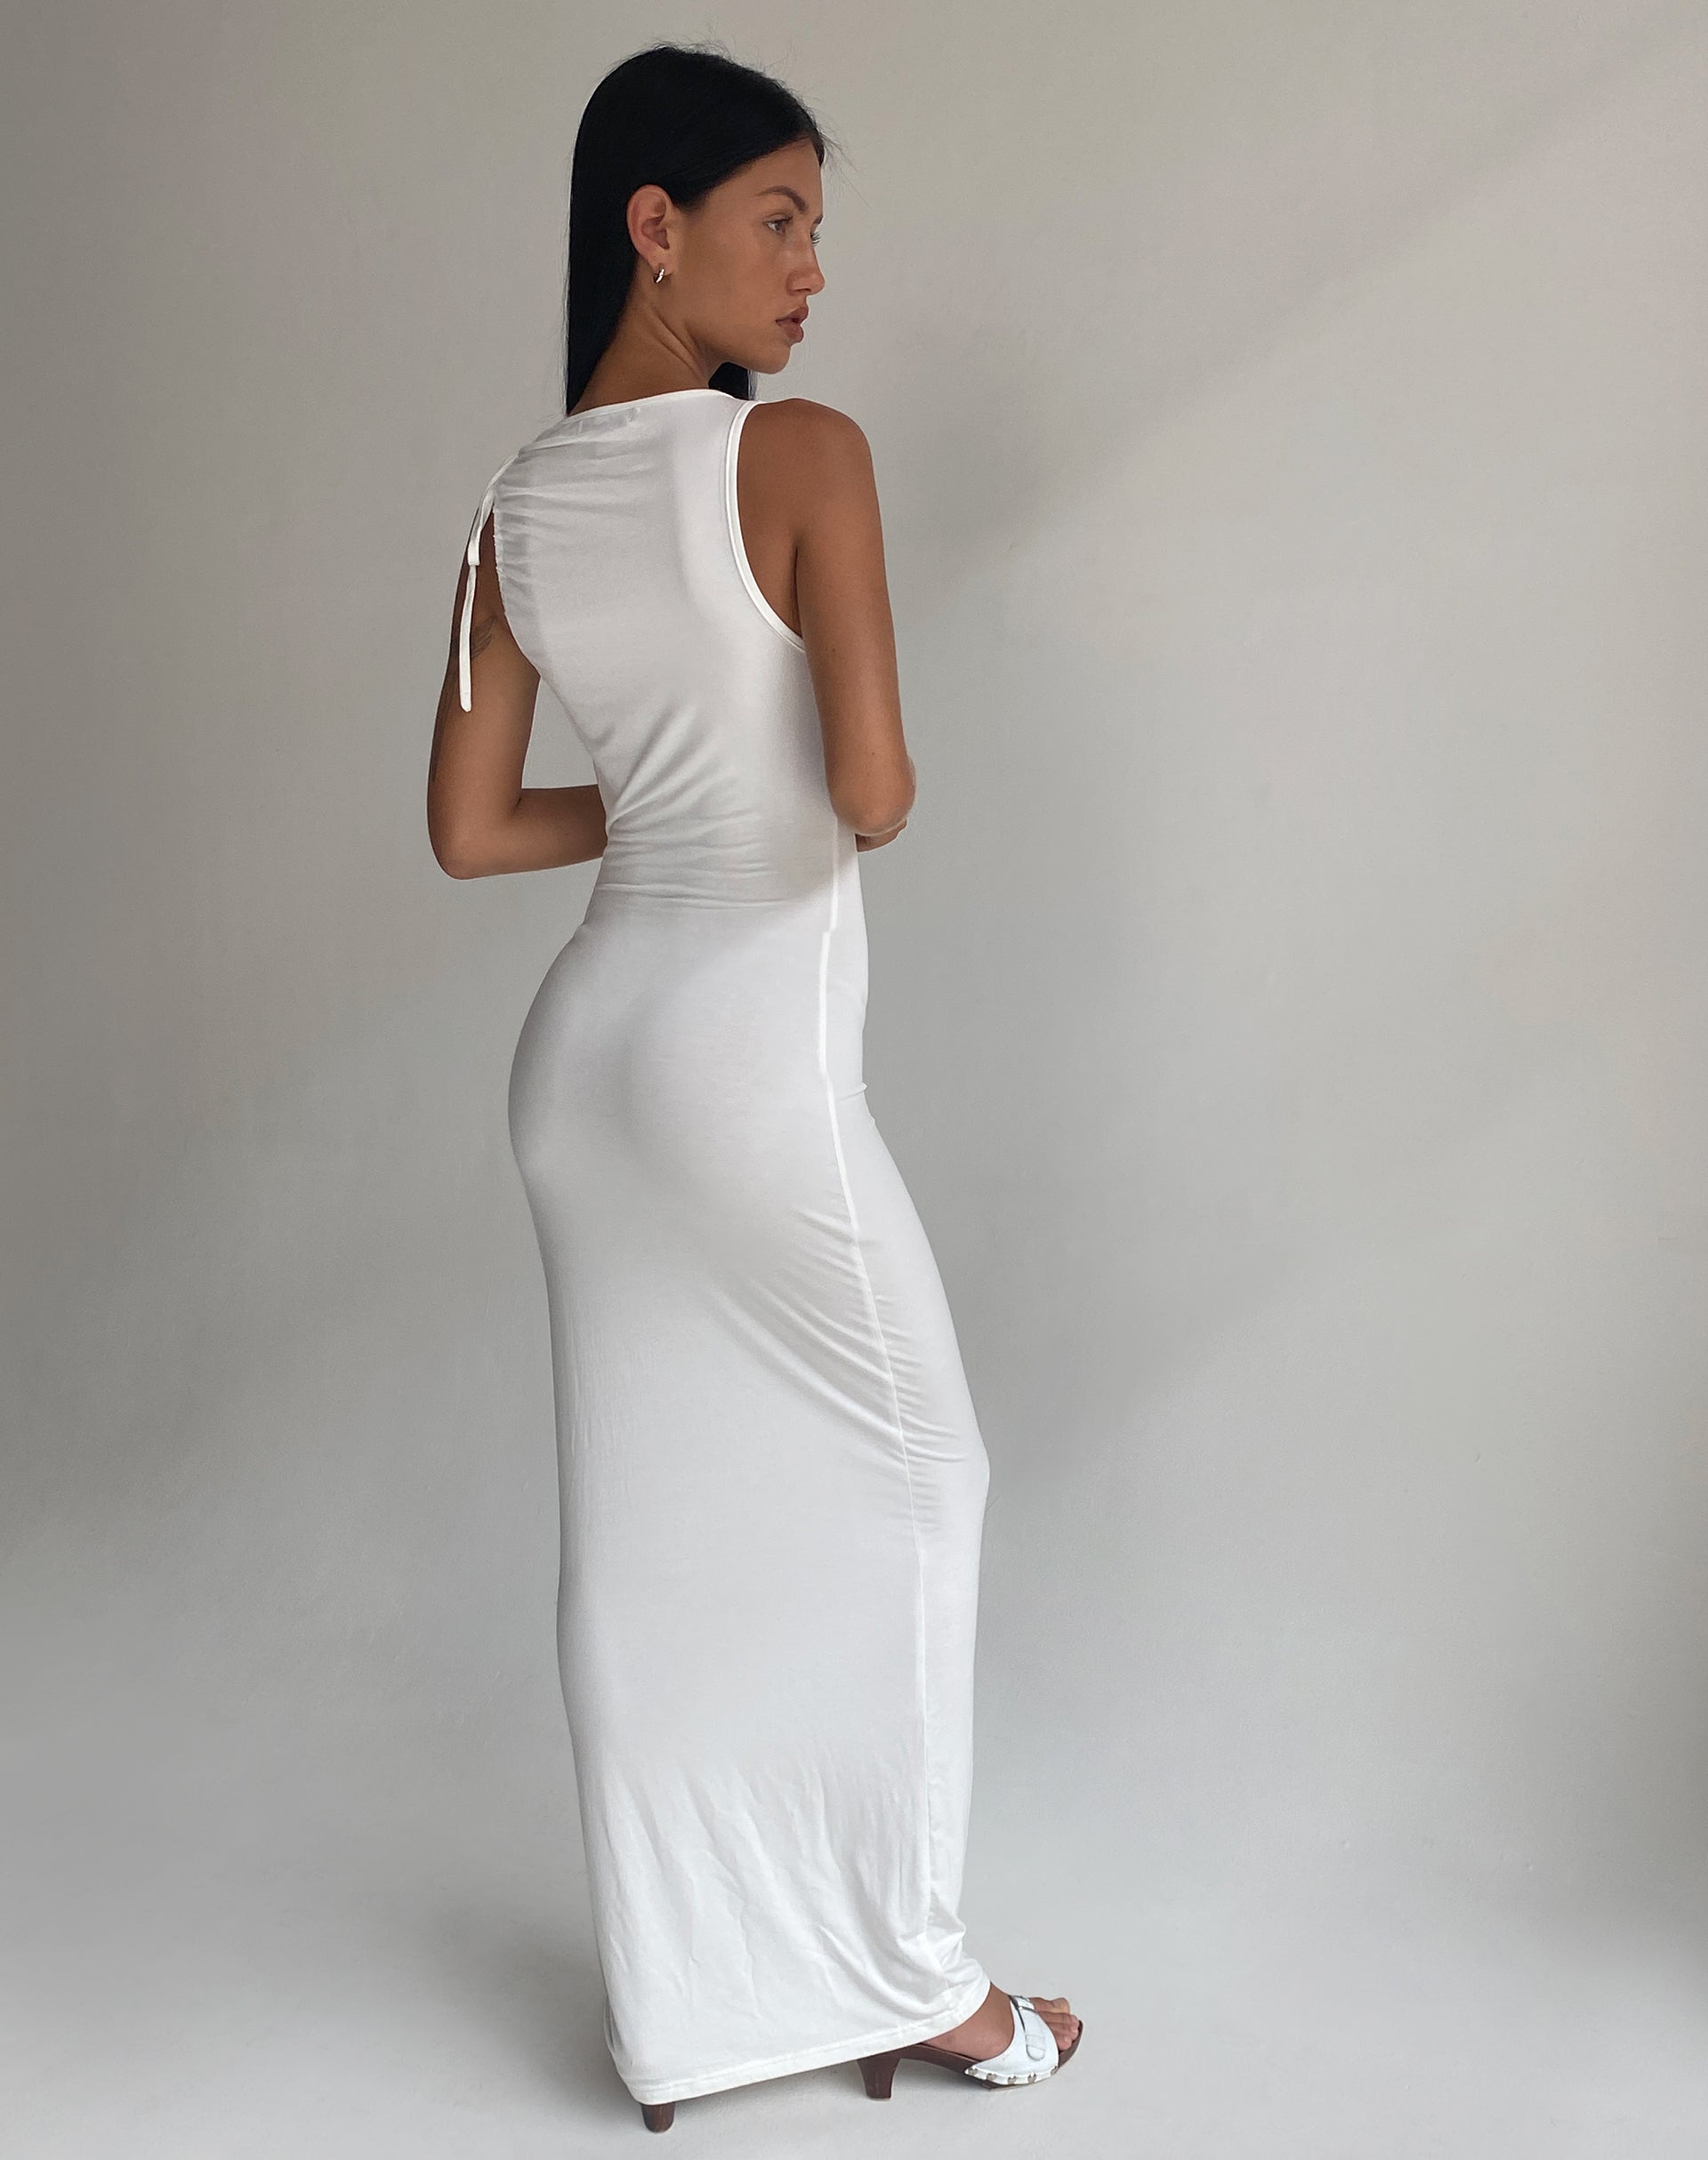 Image of Elinor Maxi Dress in Slinky White